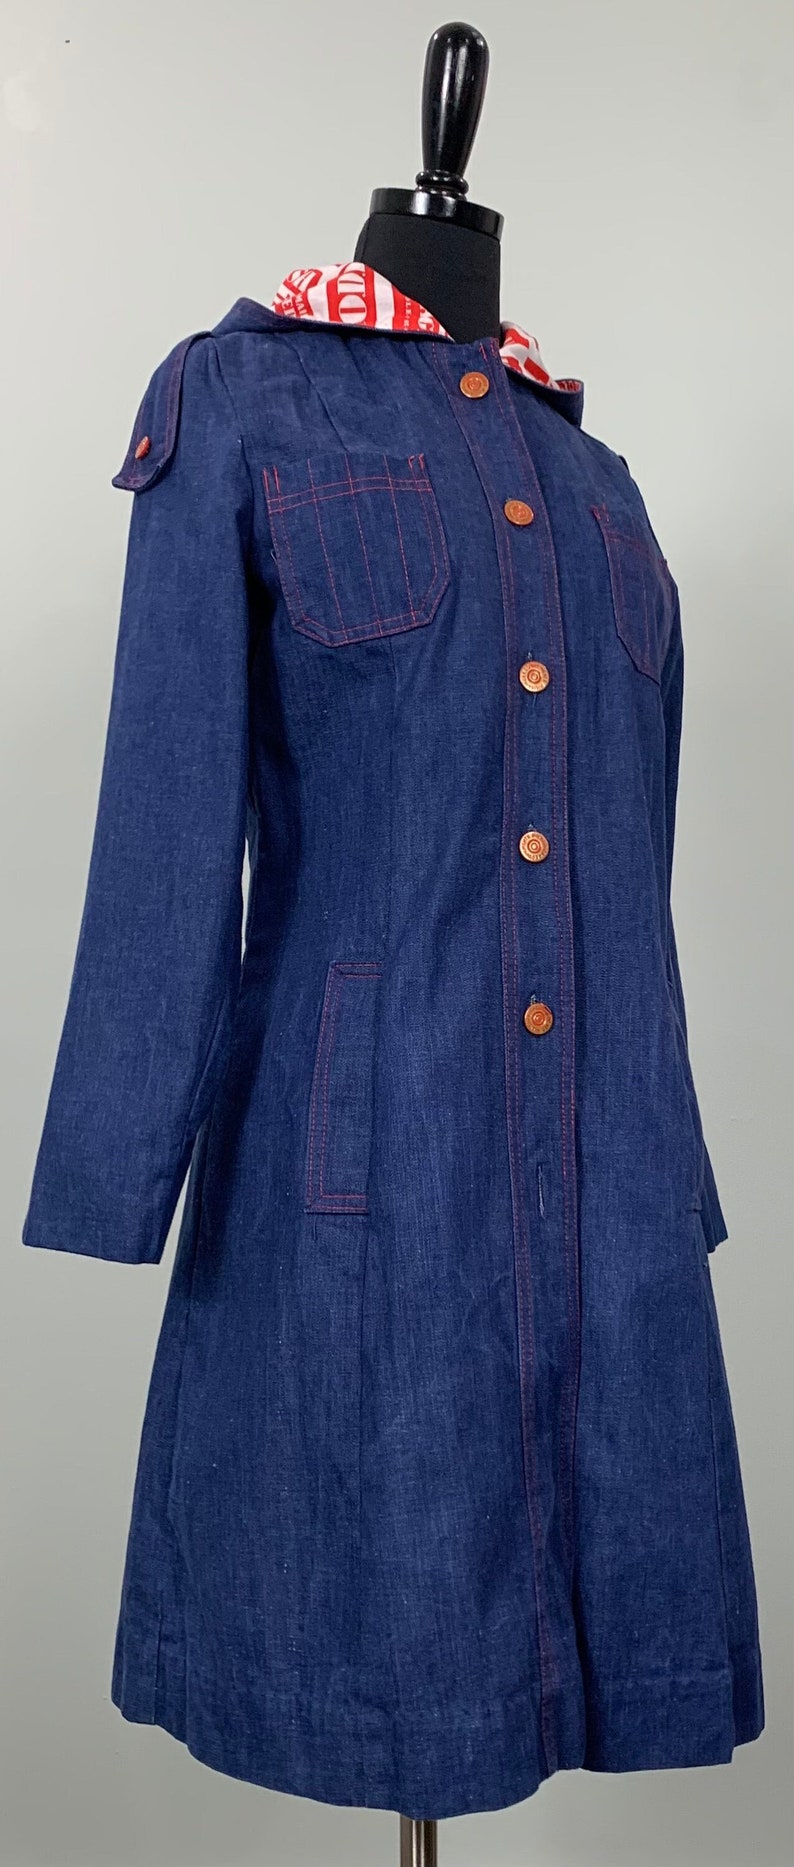 1970s Blue Jean Hooded Jacket Vintage Denim Jacket 70s Denim Duster Up to Size 6 Rush Militaries Equipment 70s Denim Blue Coat image 1